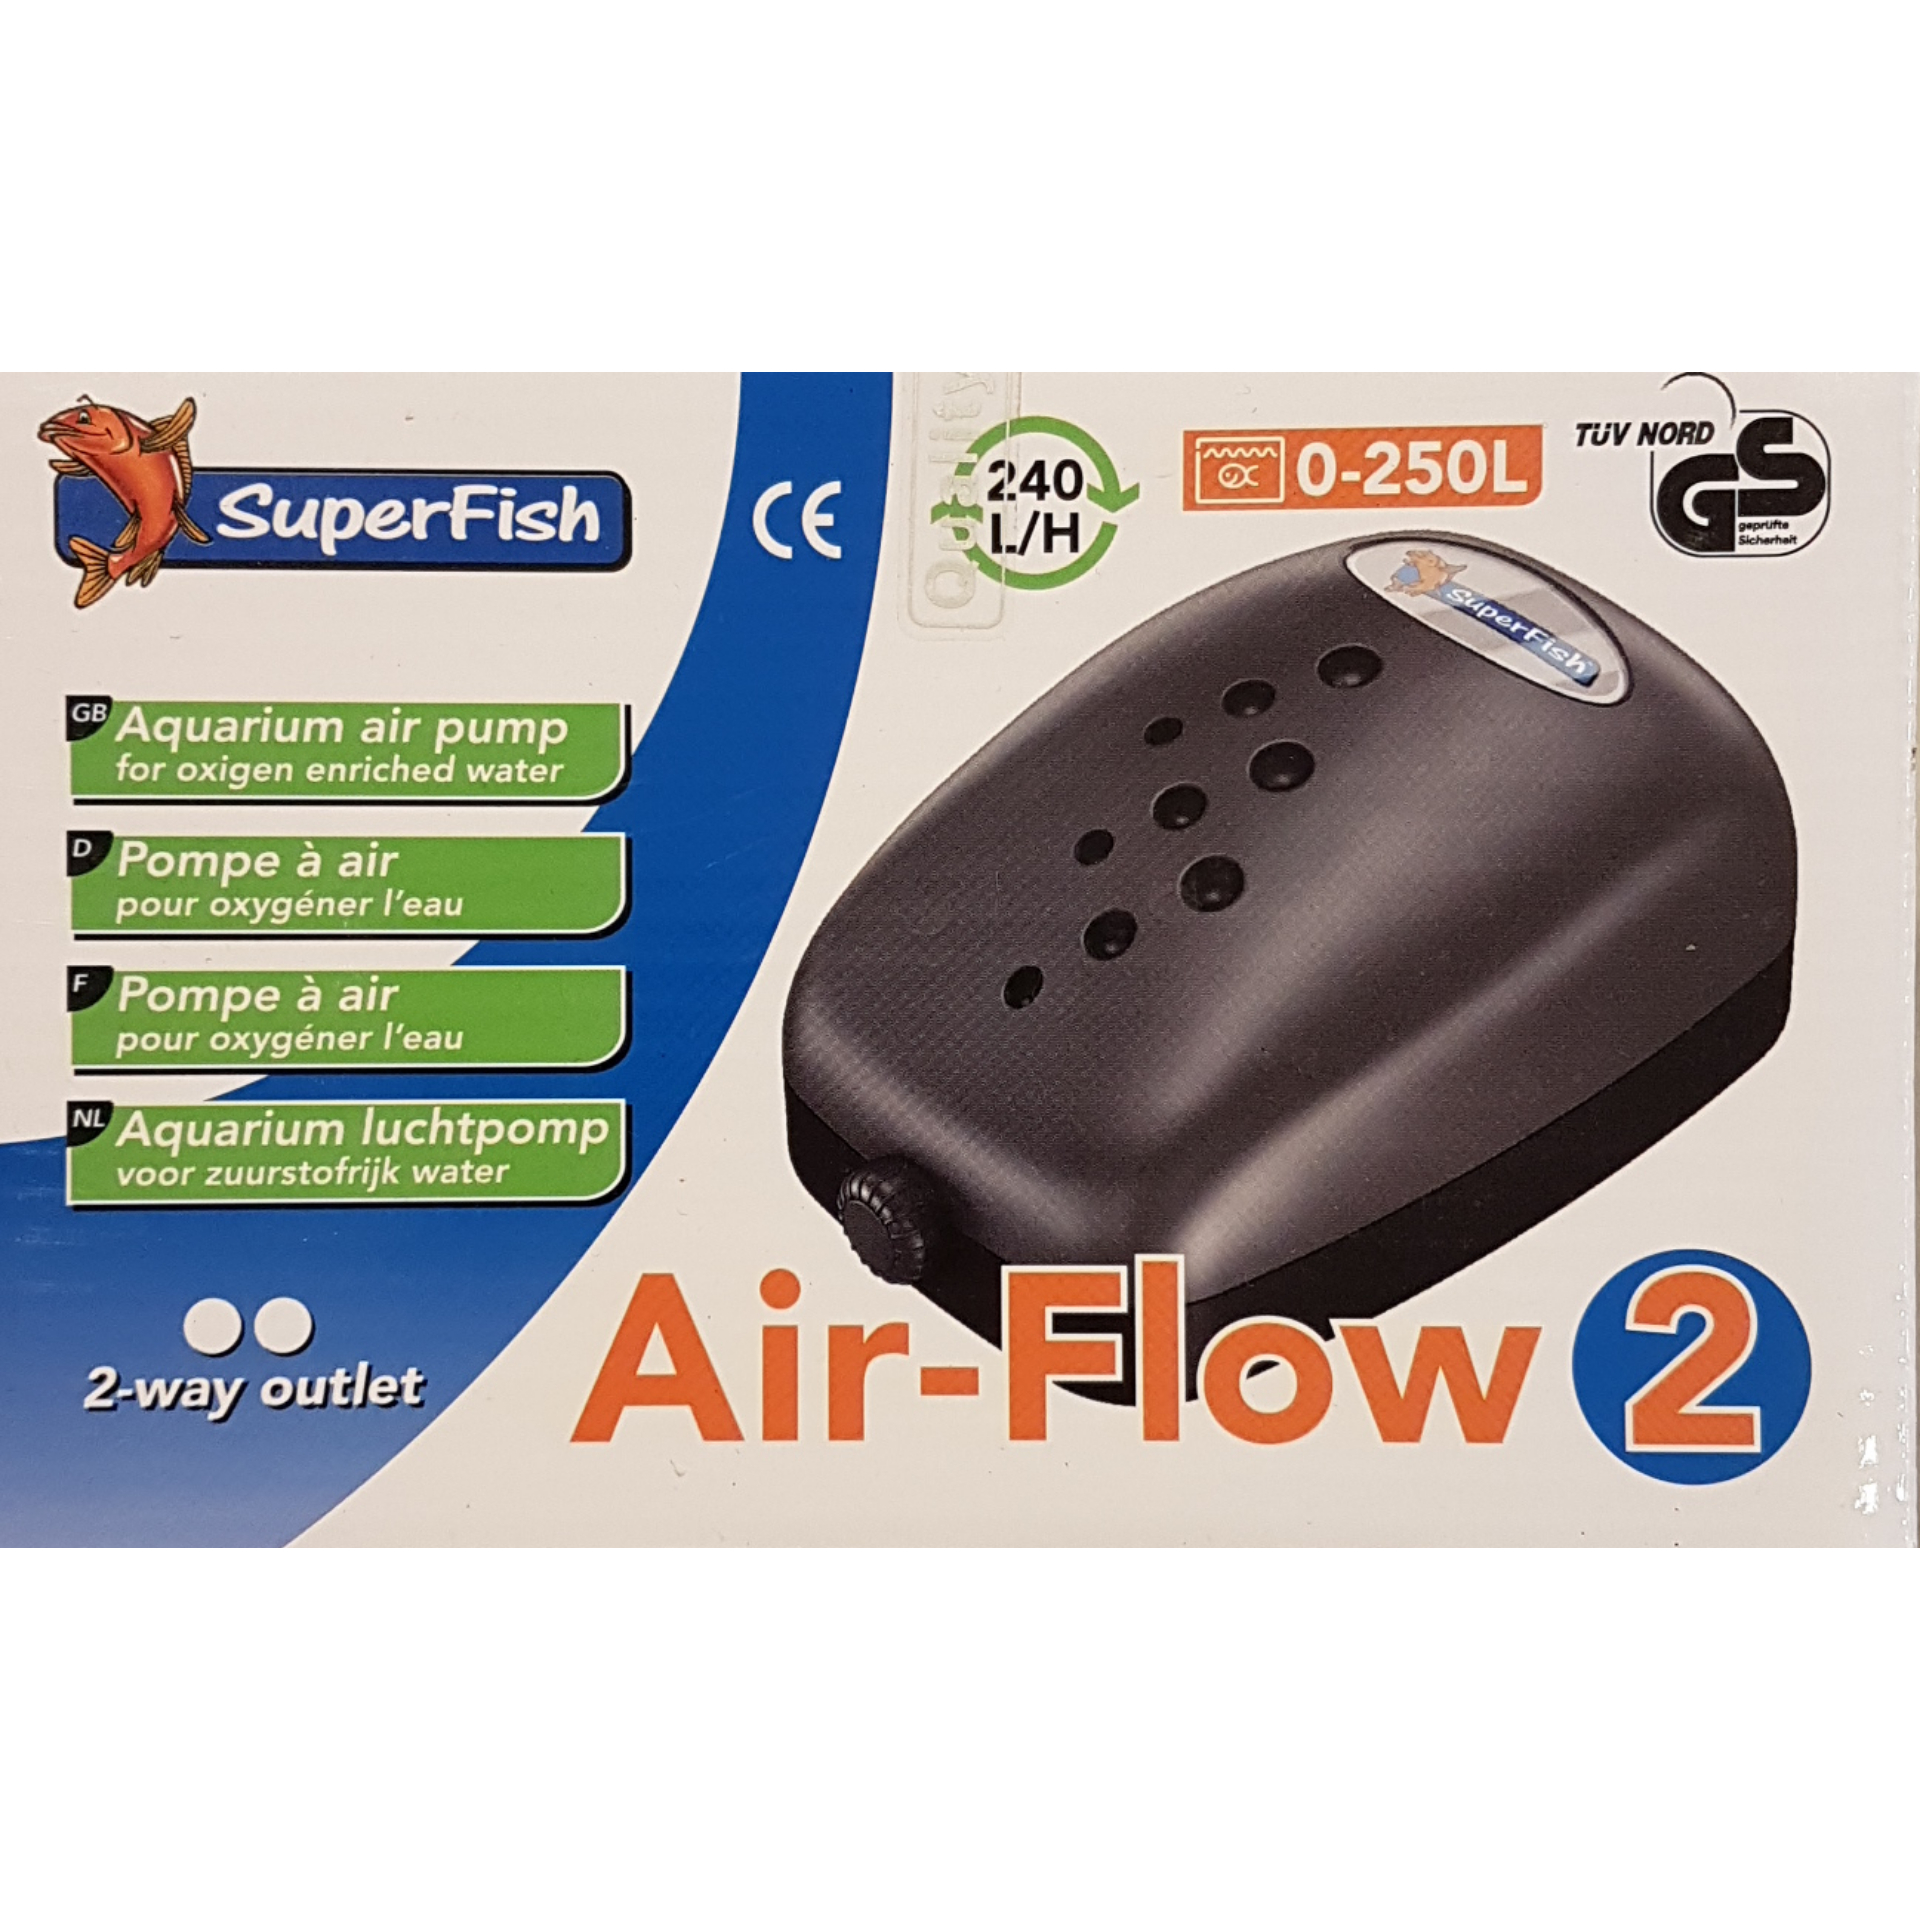 airflow 2